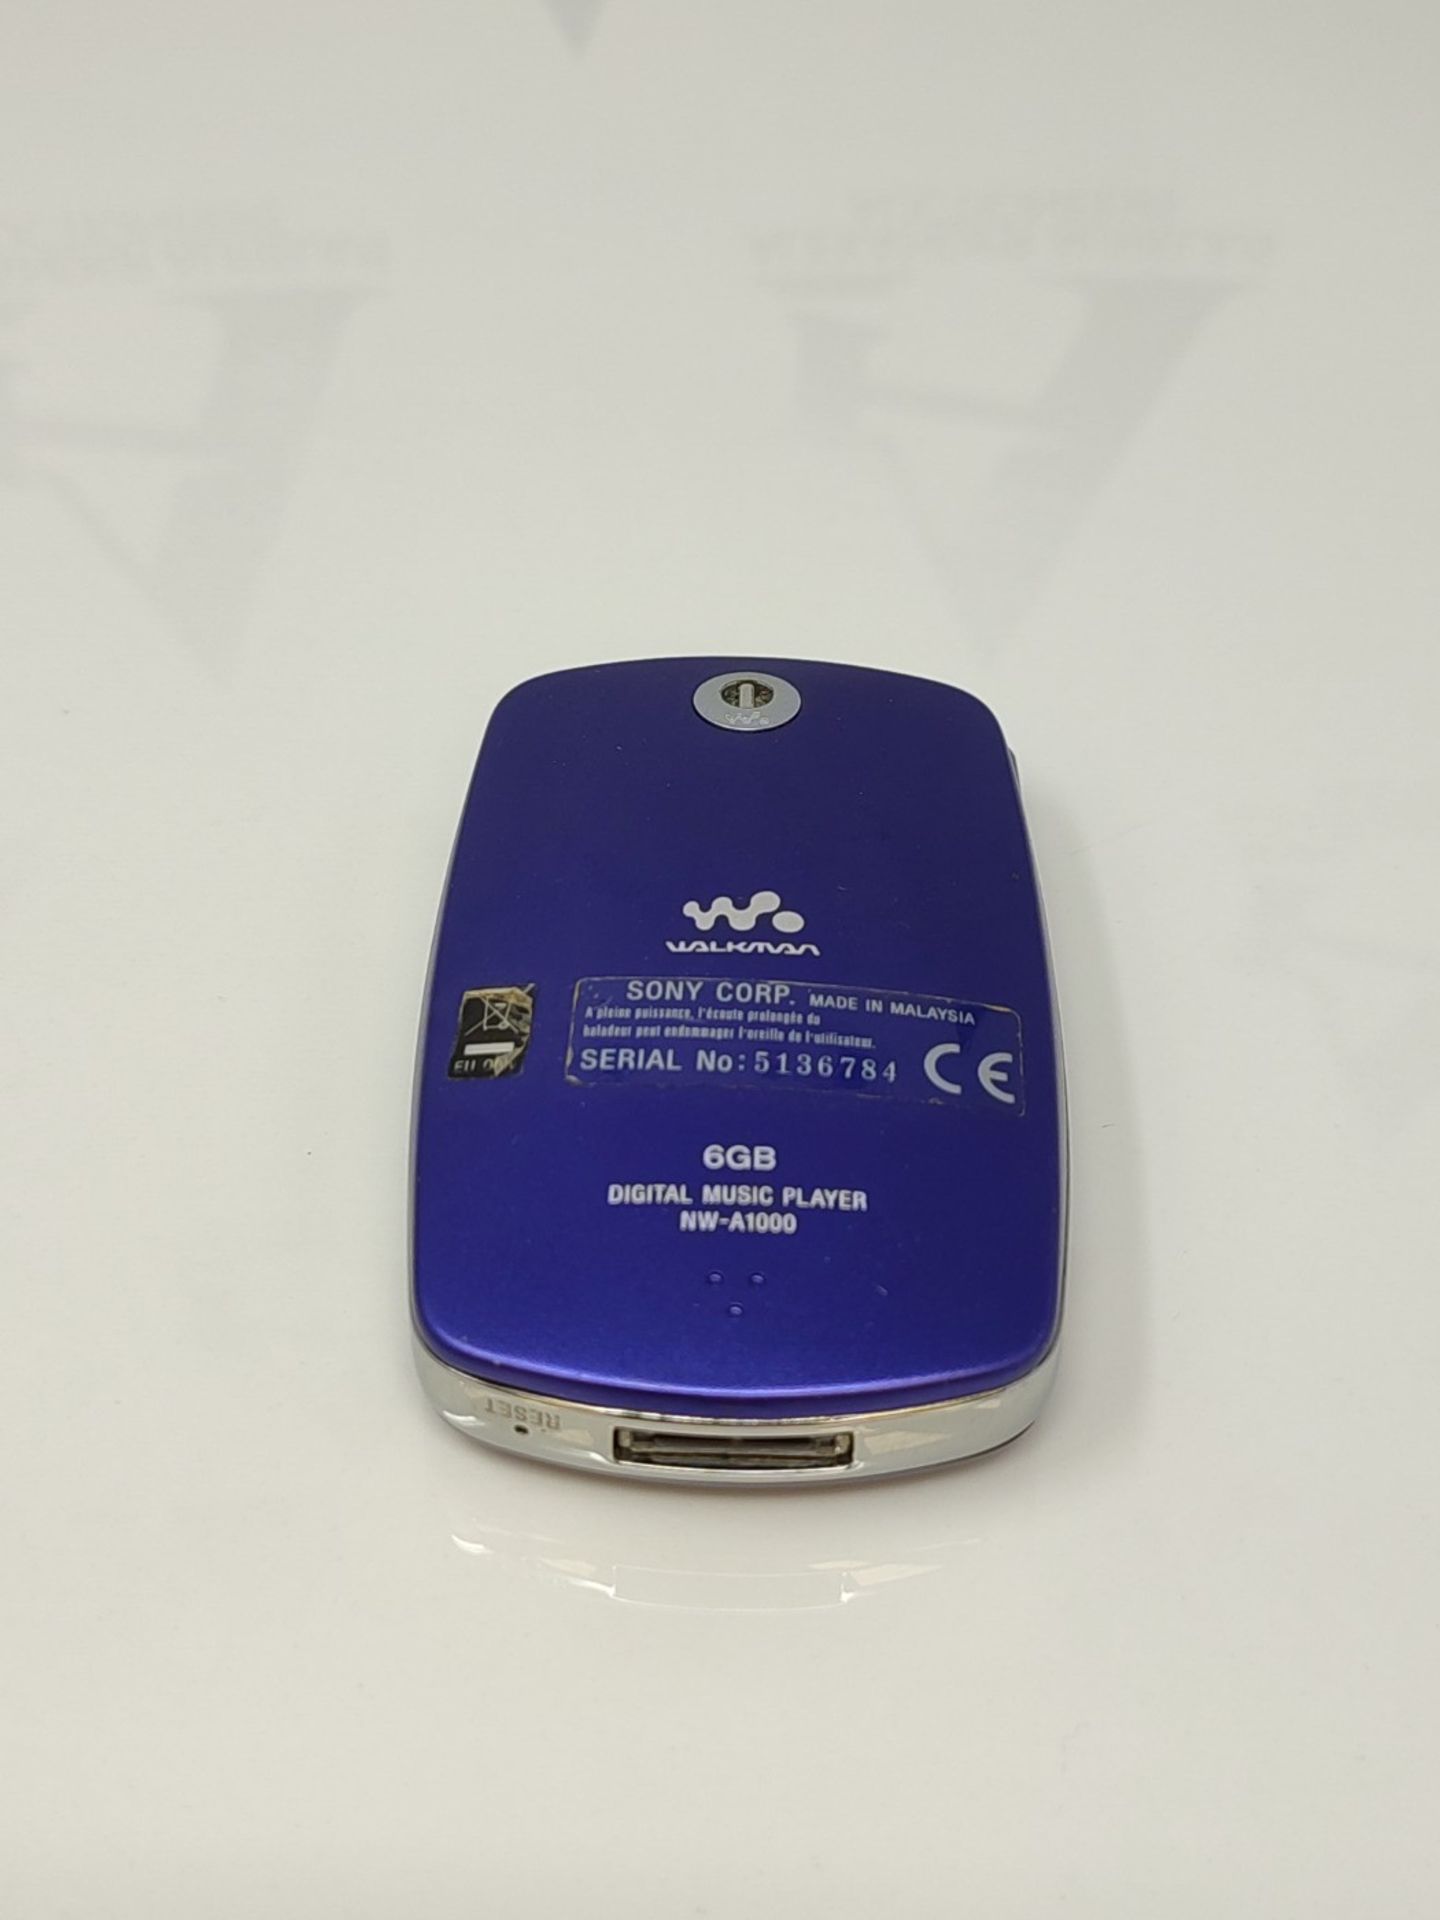 Sony Walkman NW-A1000 (6GB) Digital Media Player - Image 2 of 2